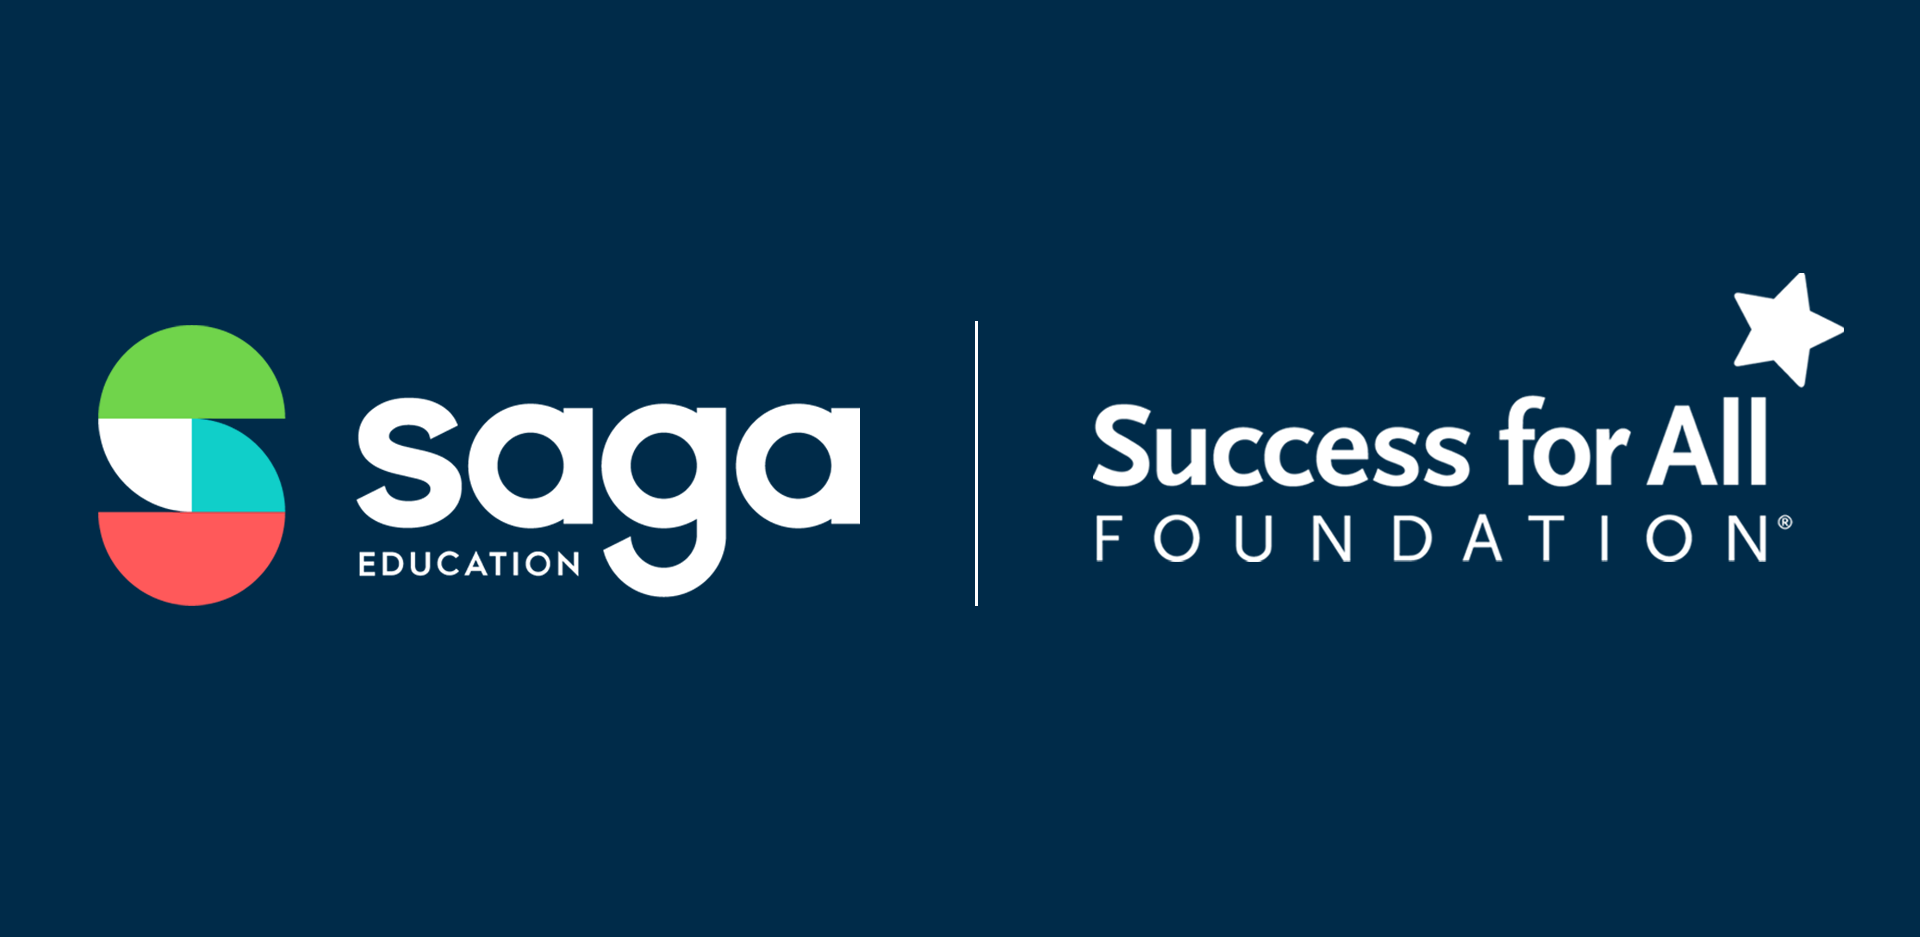 Saga Education Partnership with Success For All